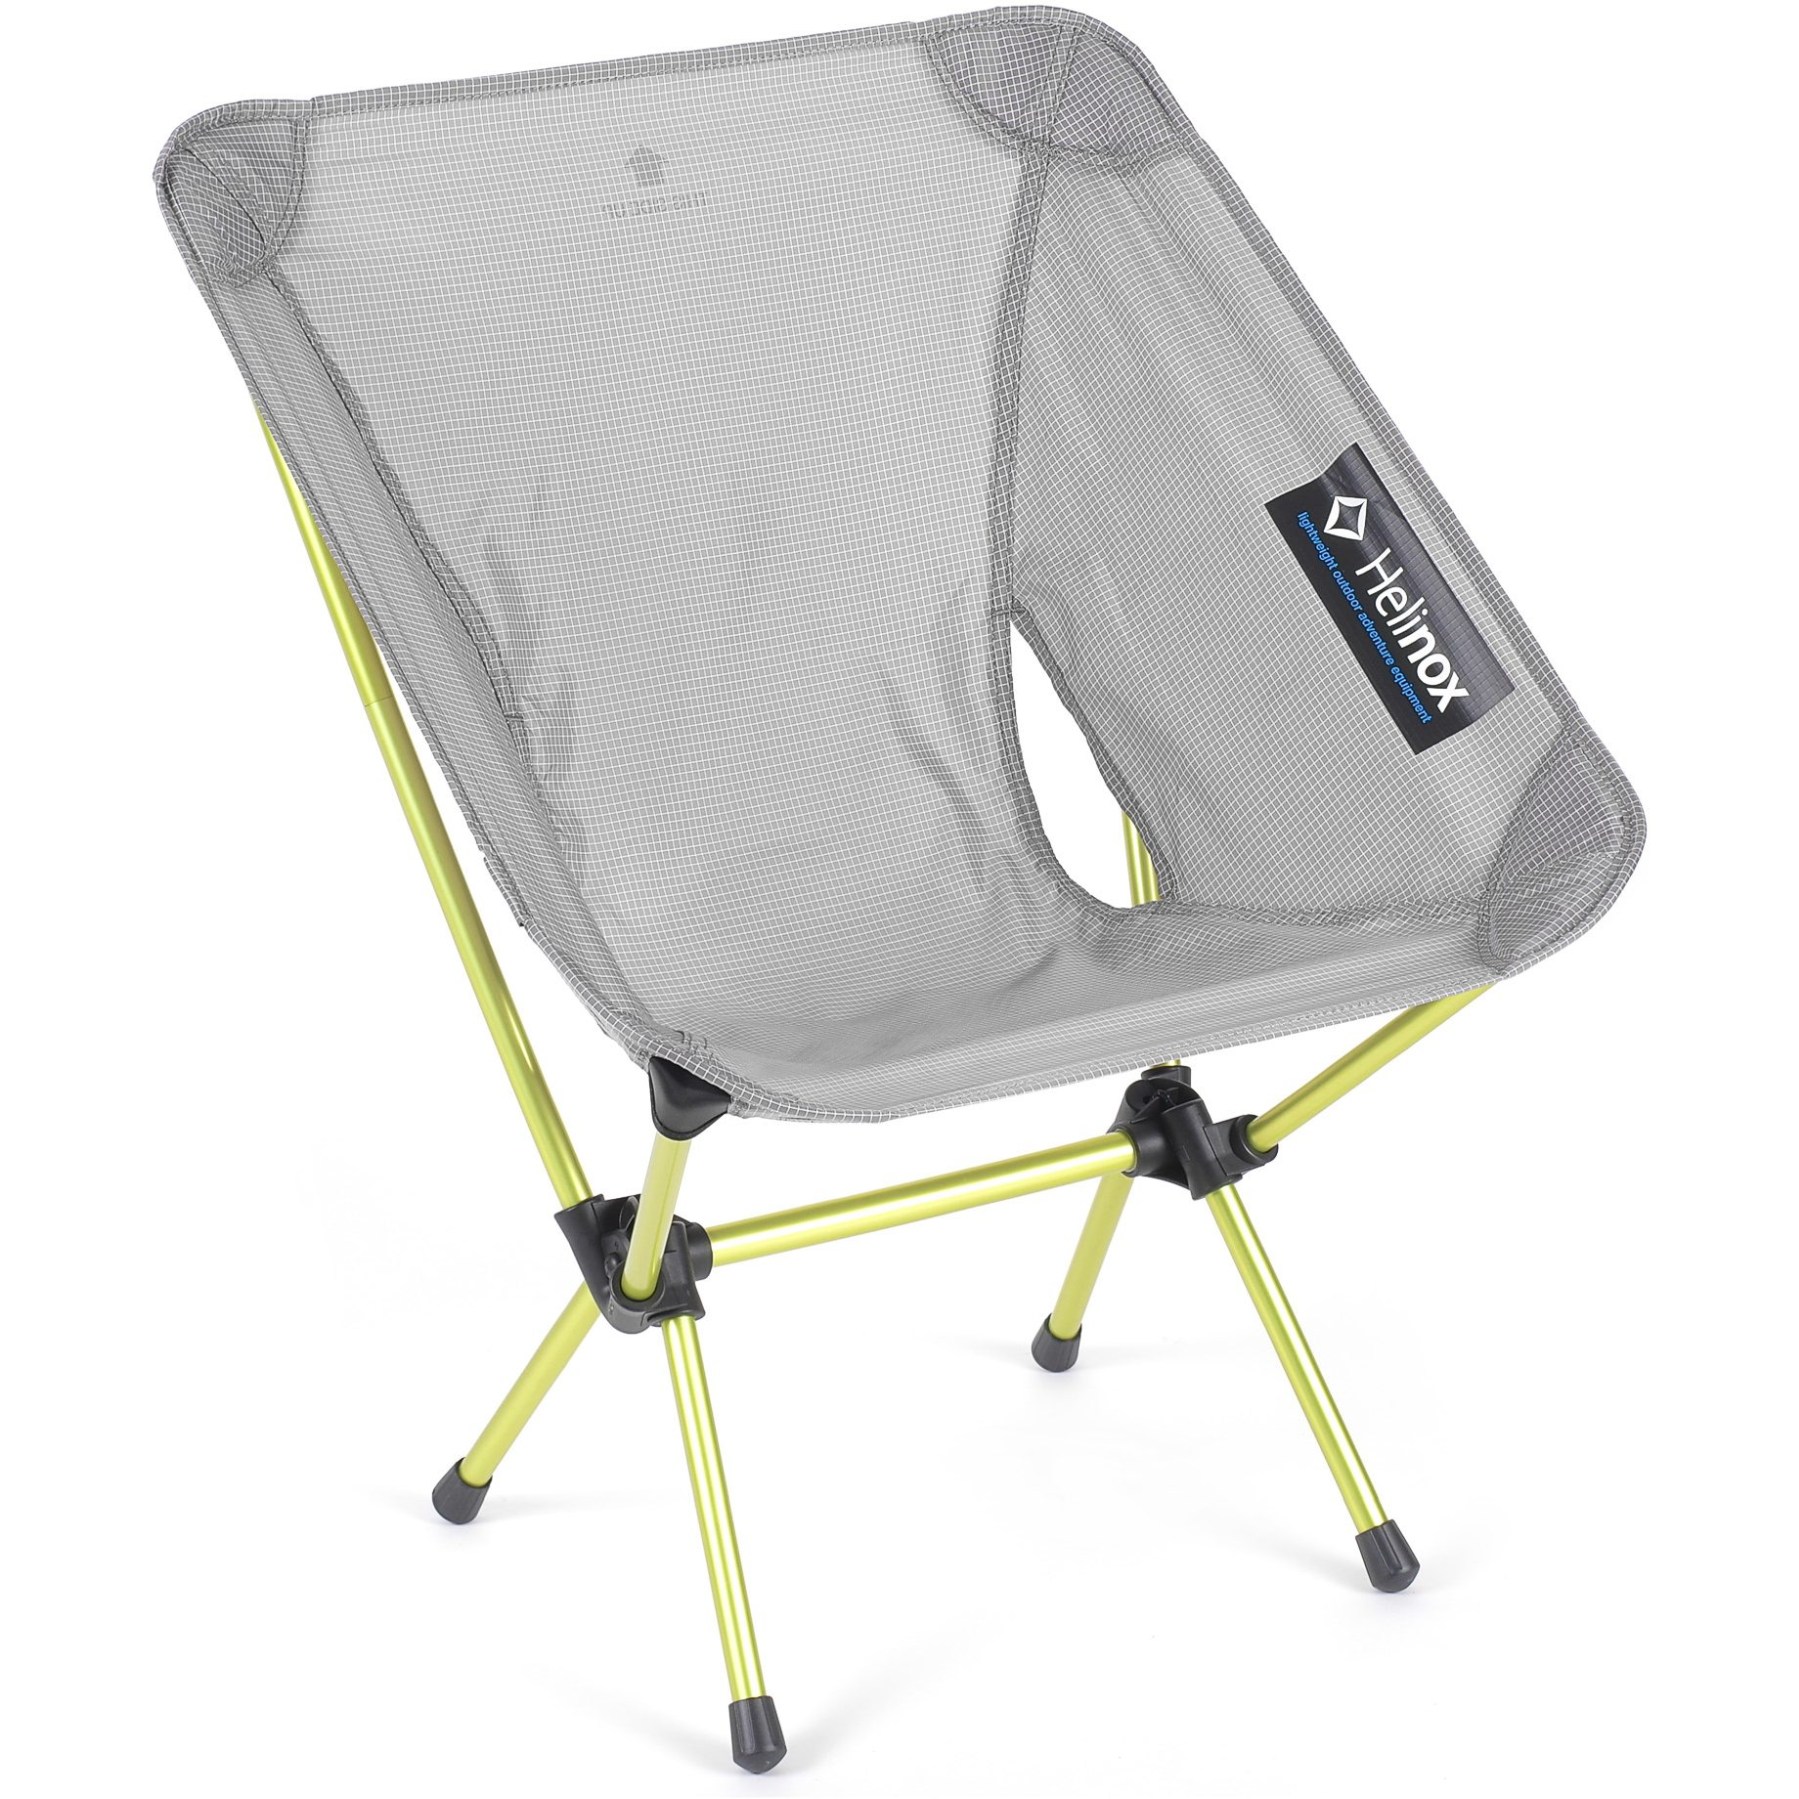 Productfoto van Helinox Chair Zero L - Campingstoel - Grijs / Melon